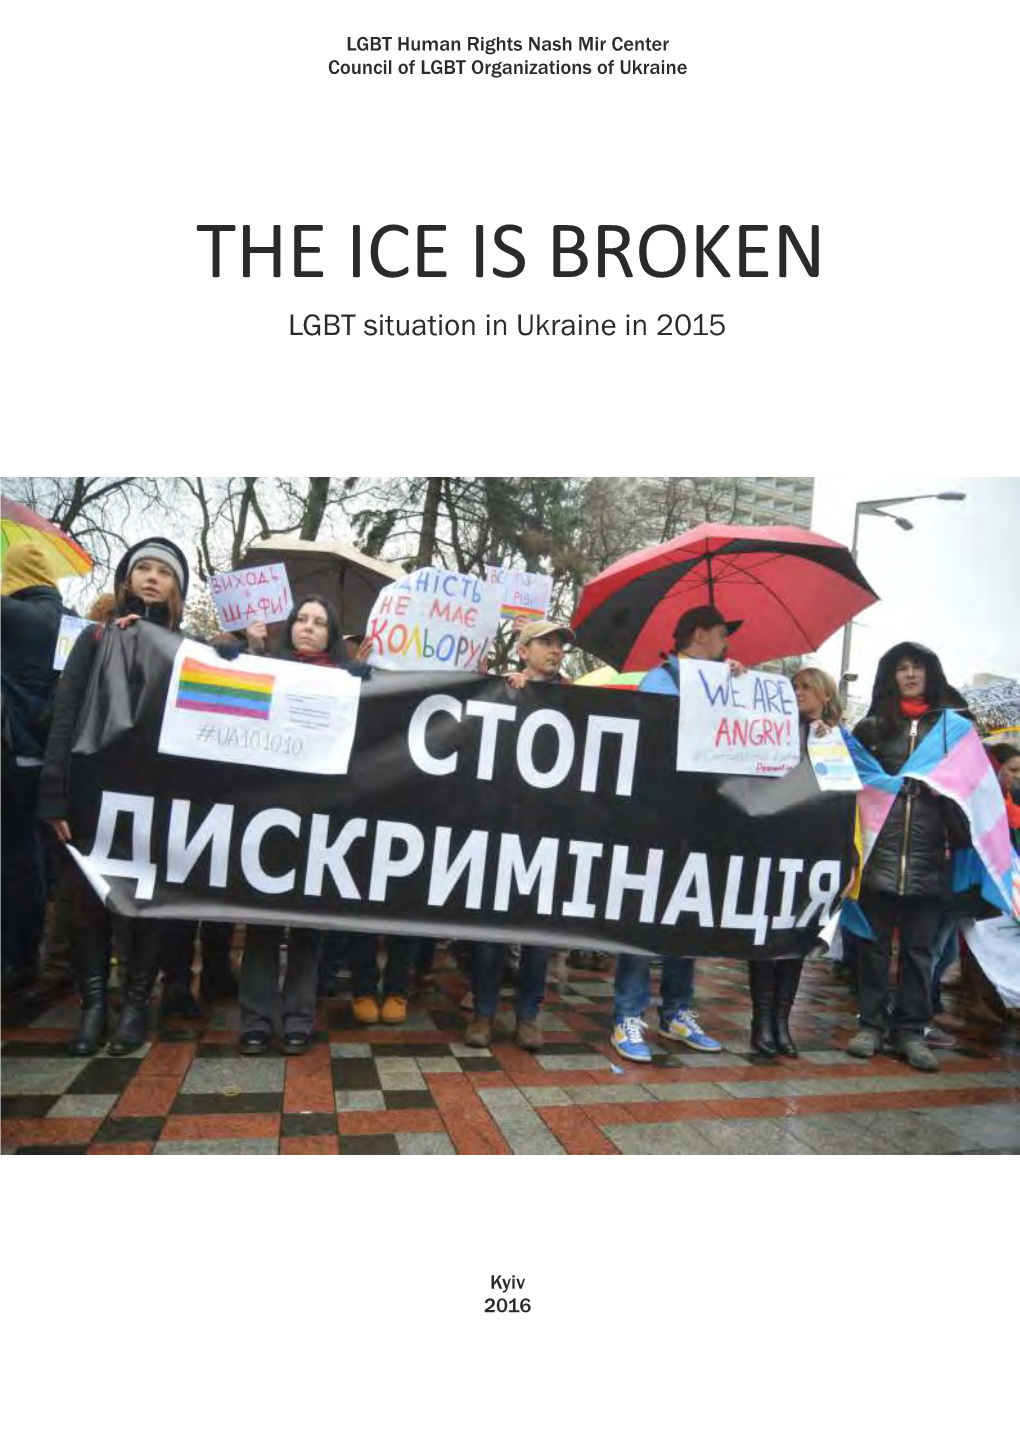 THE ICE IS BROKEN LGBT Situation in Ukraine in 2015